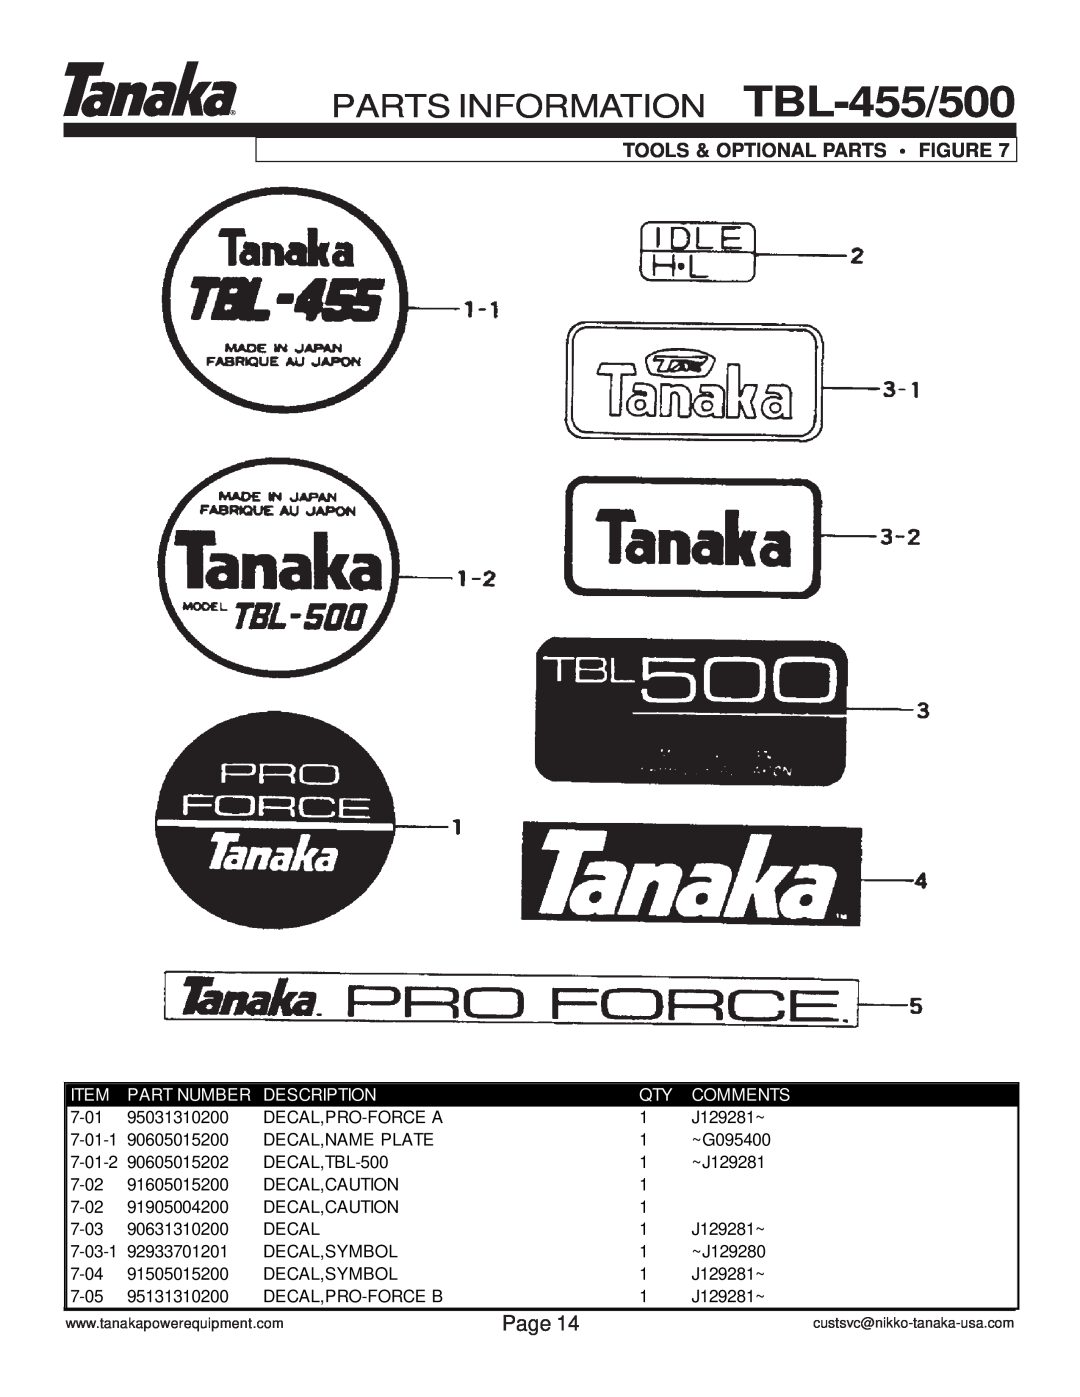 Tanaka manual PARTS INFORMATION TBL-455/500, Tools & Optional Parts Figure, Page, Part Number, Description, Comments 